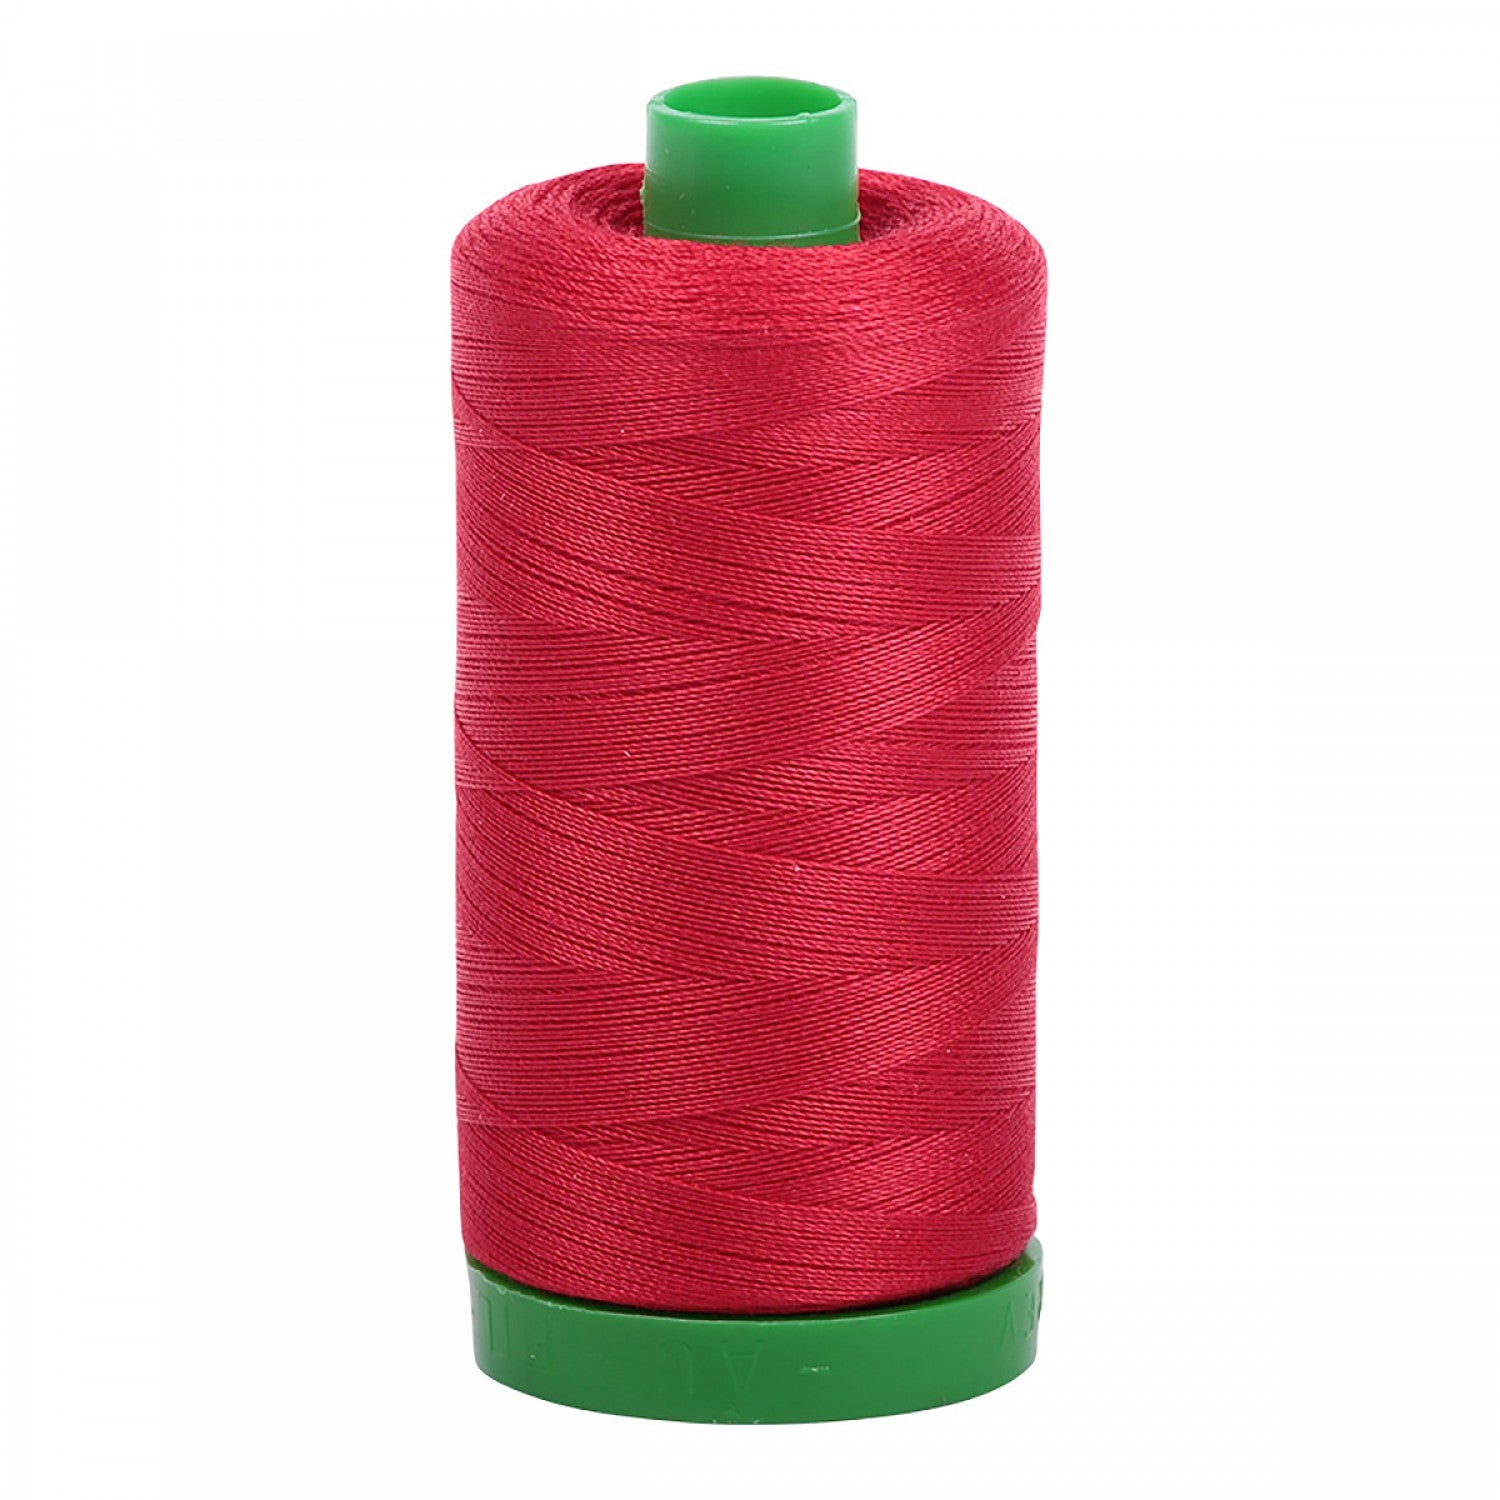 Aurifil Mako 40 wt Cotton Thread - 1094 yds - Red (#2250)